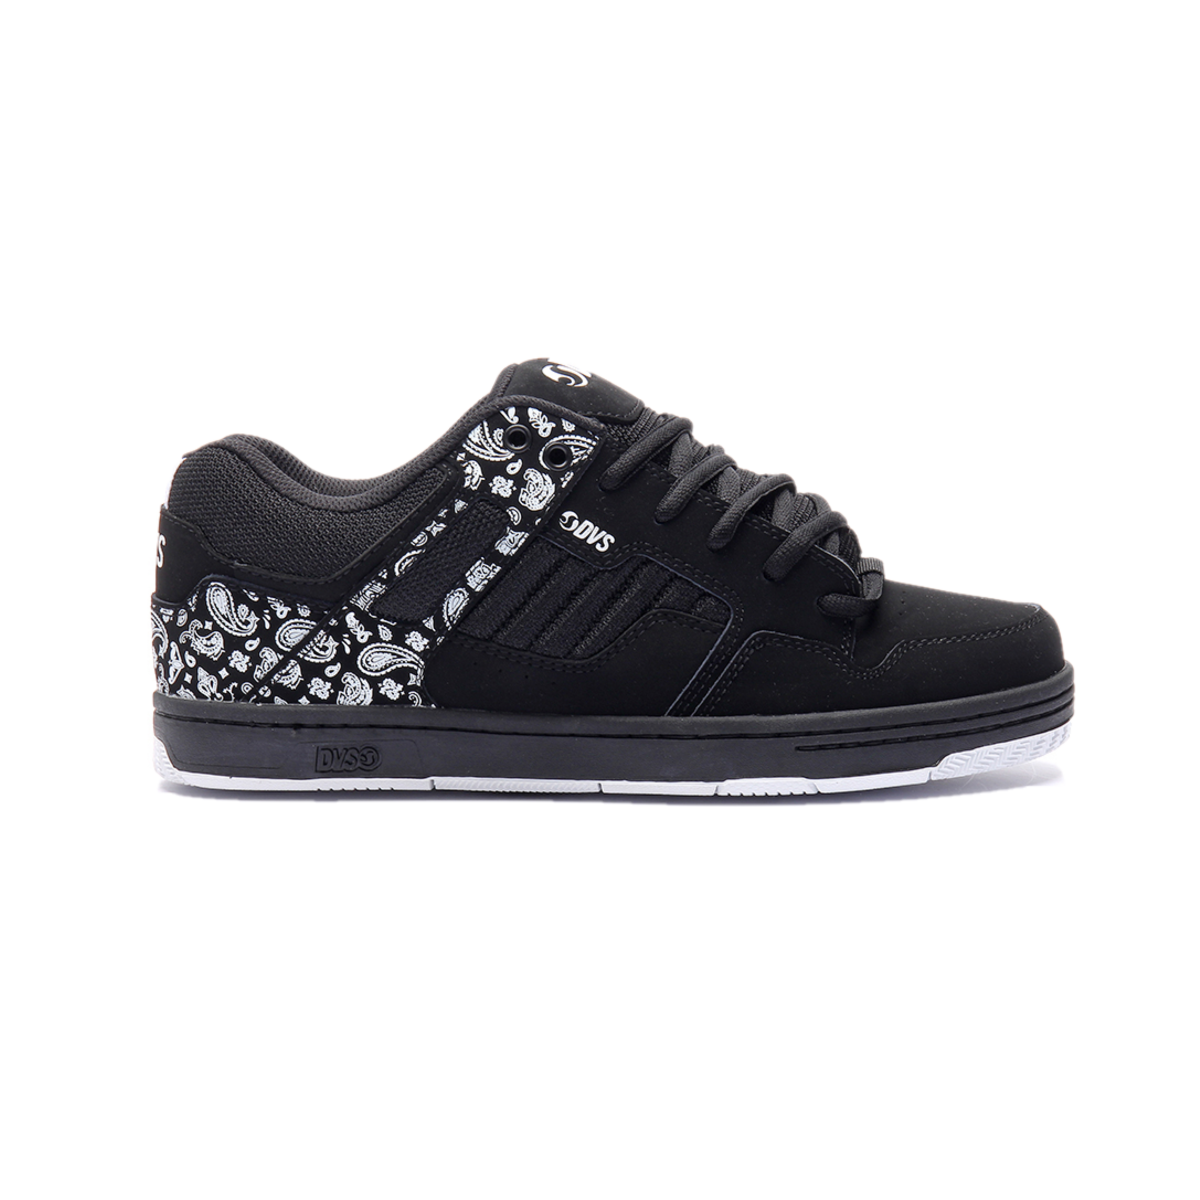 DVS F0000278035 ENDURO 125 MN'S (Medium) Black/White/Printed Leather & Mesh Skate Shoes